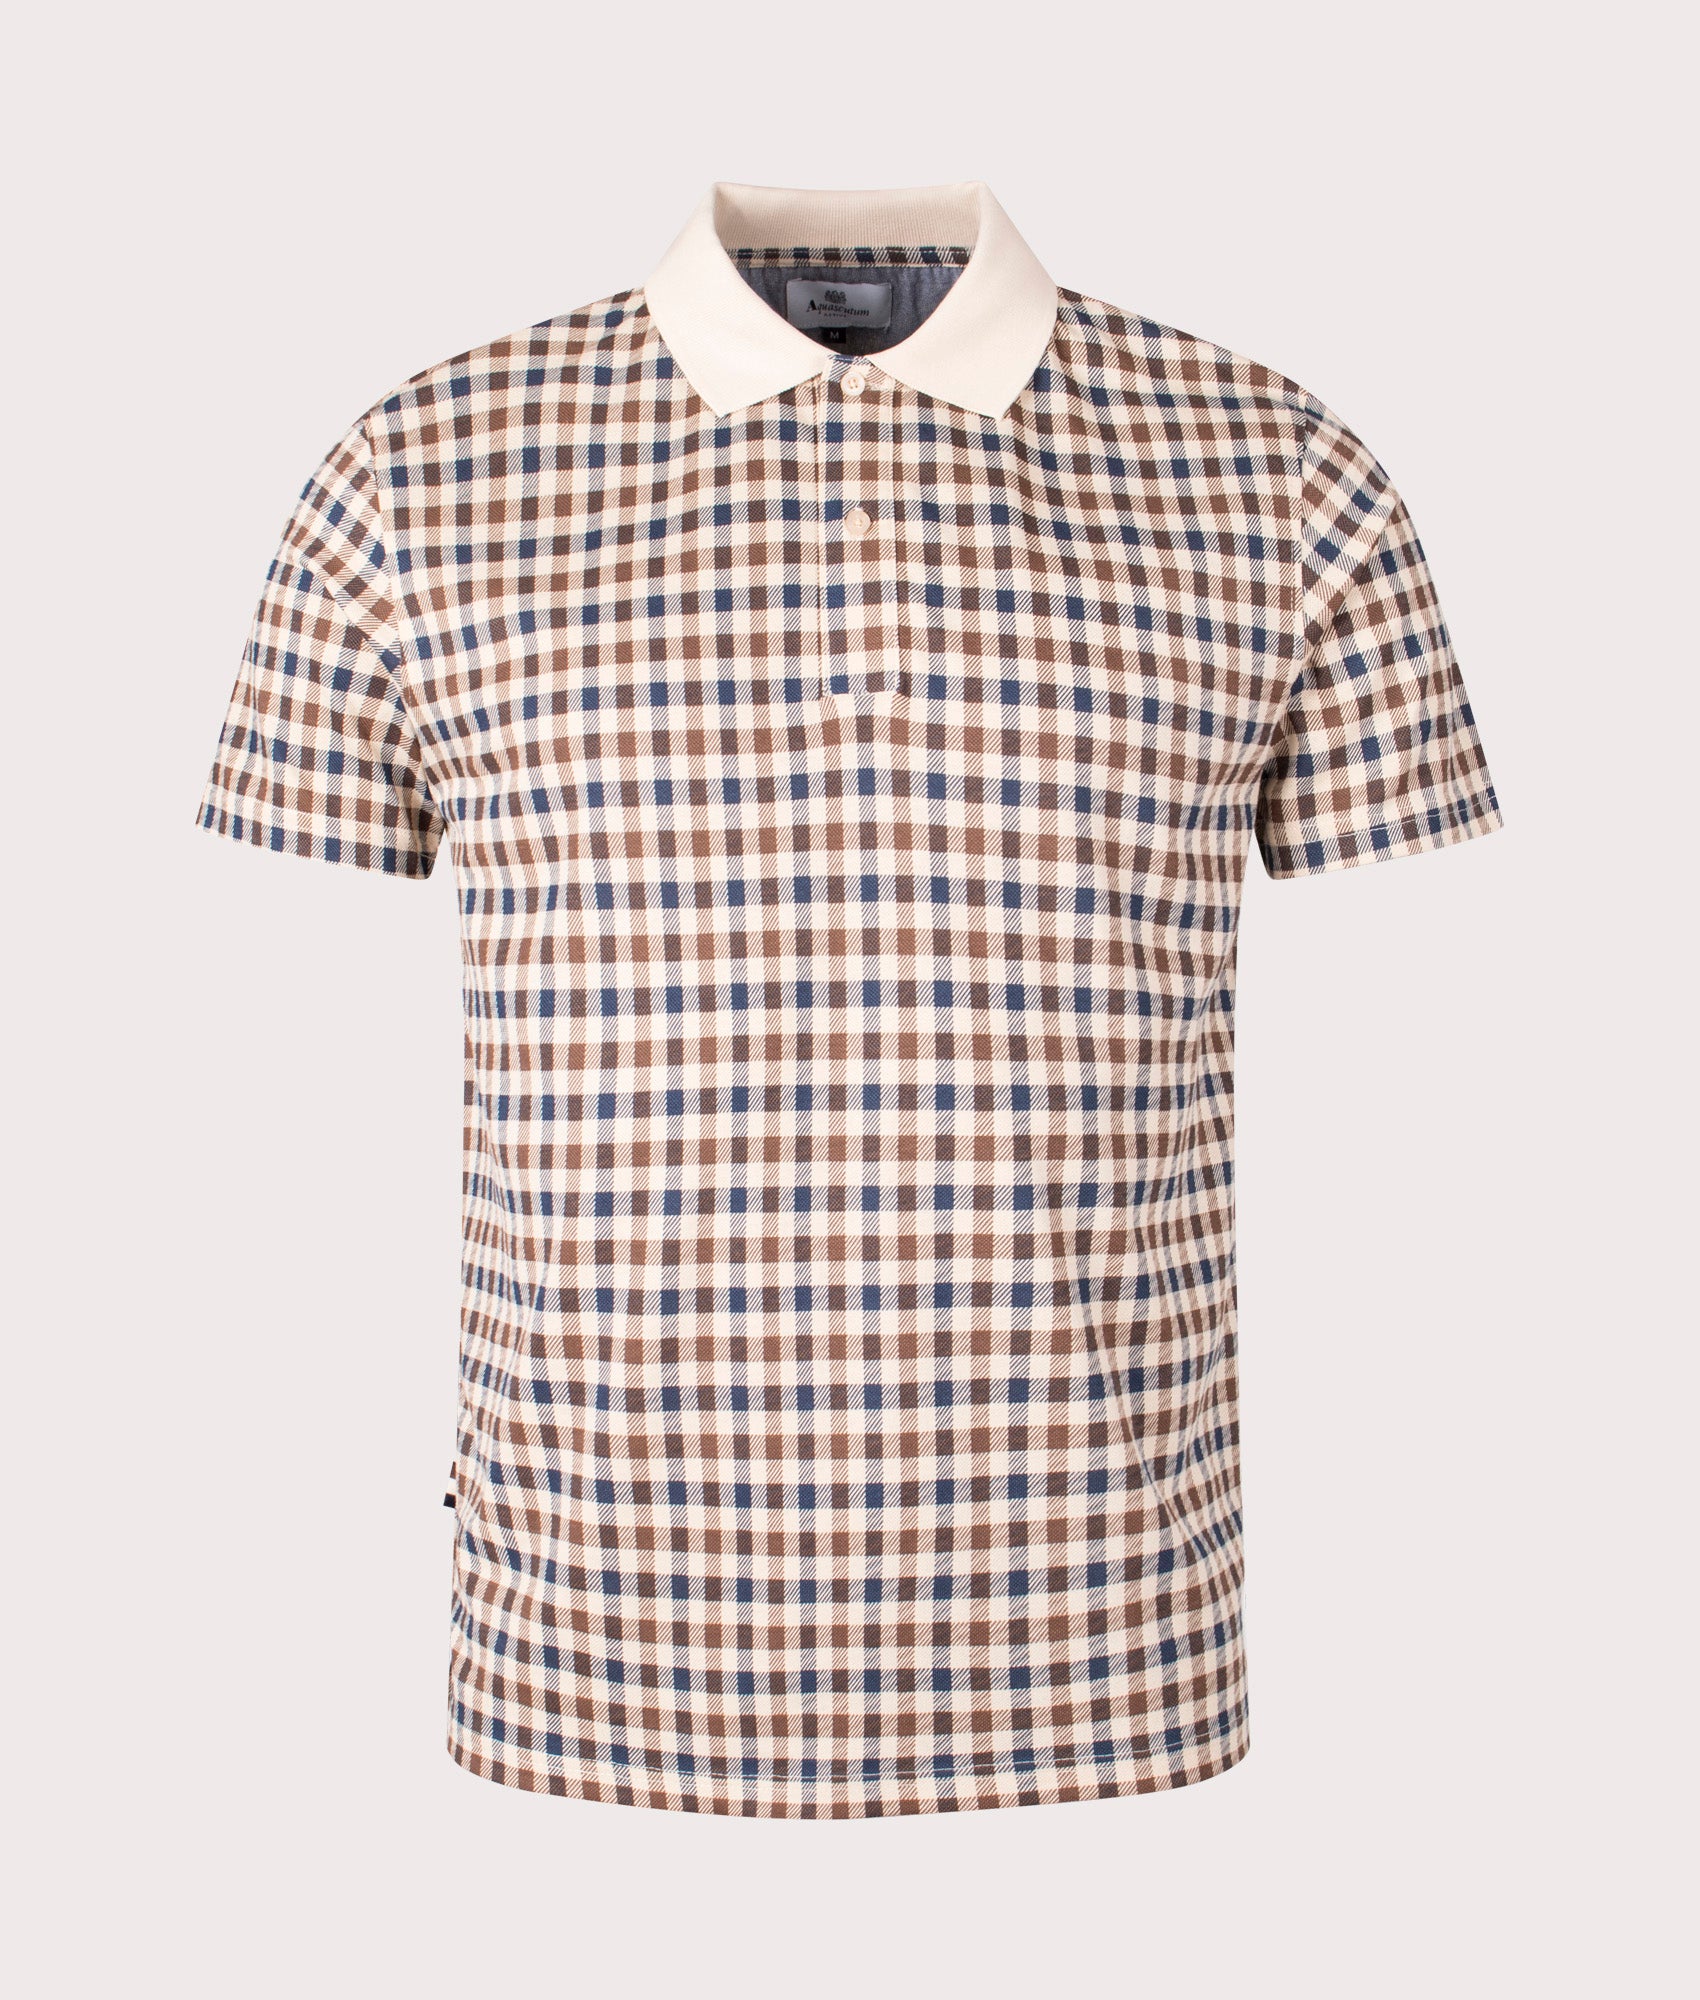 Aquascutum Mens Active Club Check Polo Shirt - Colour: 03 Beige Check - Size: Large